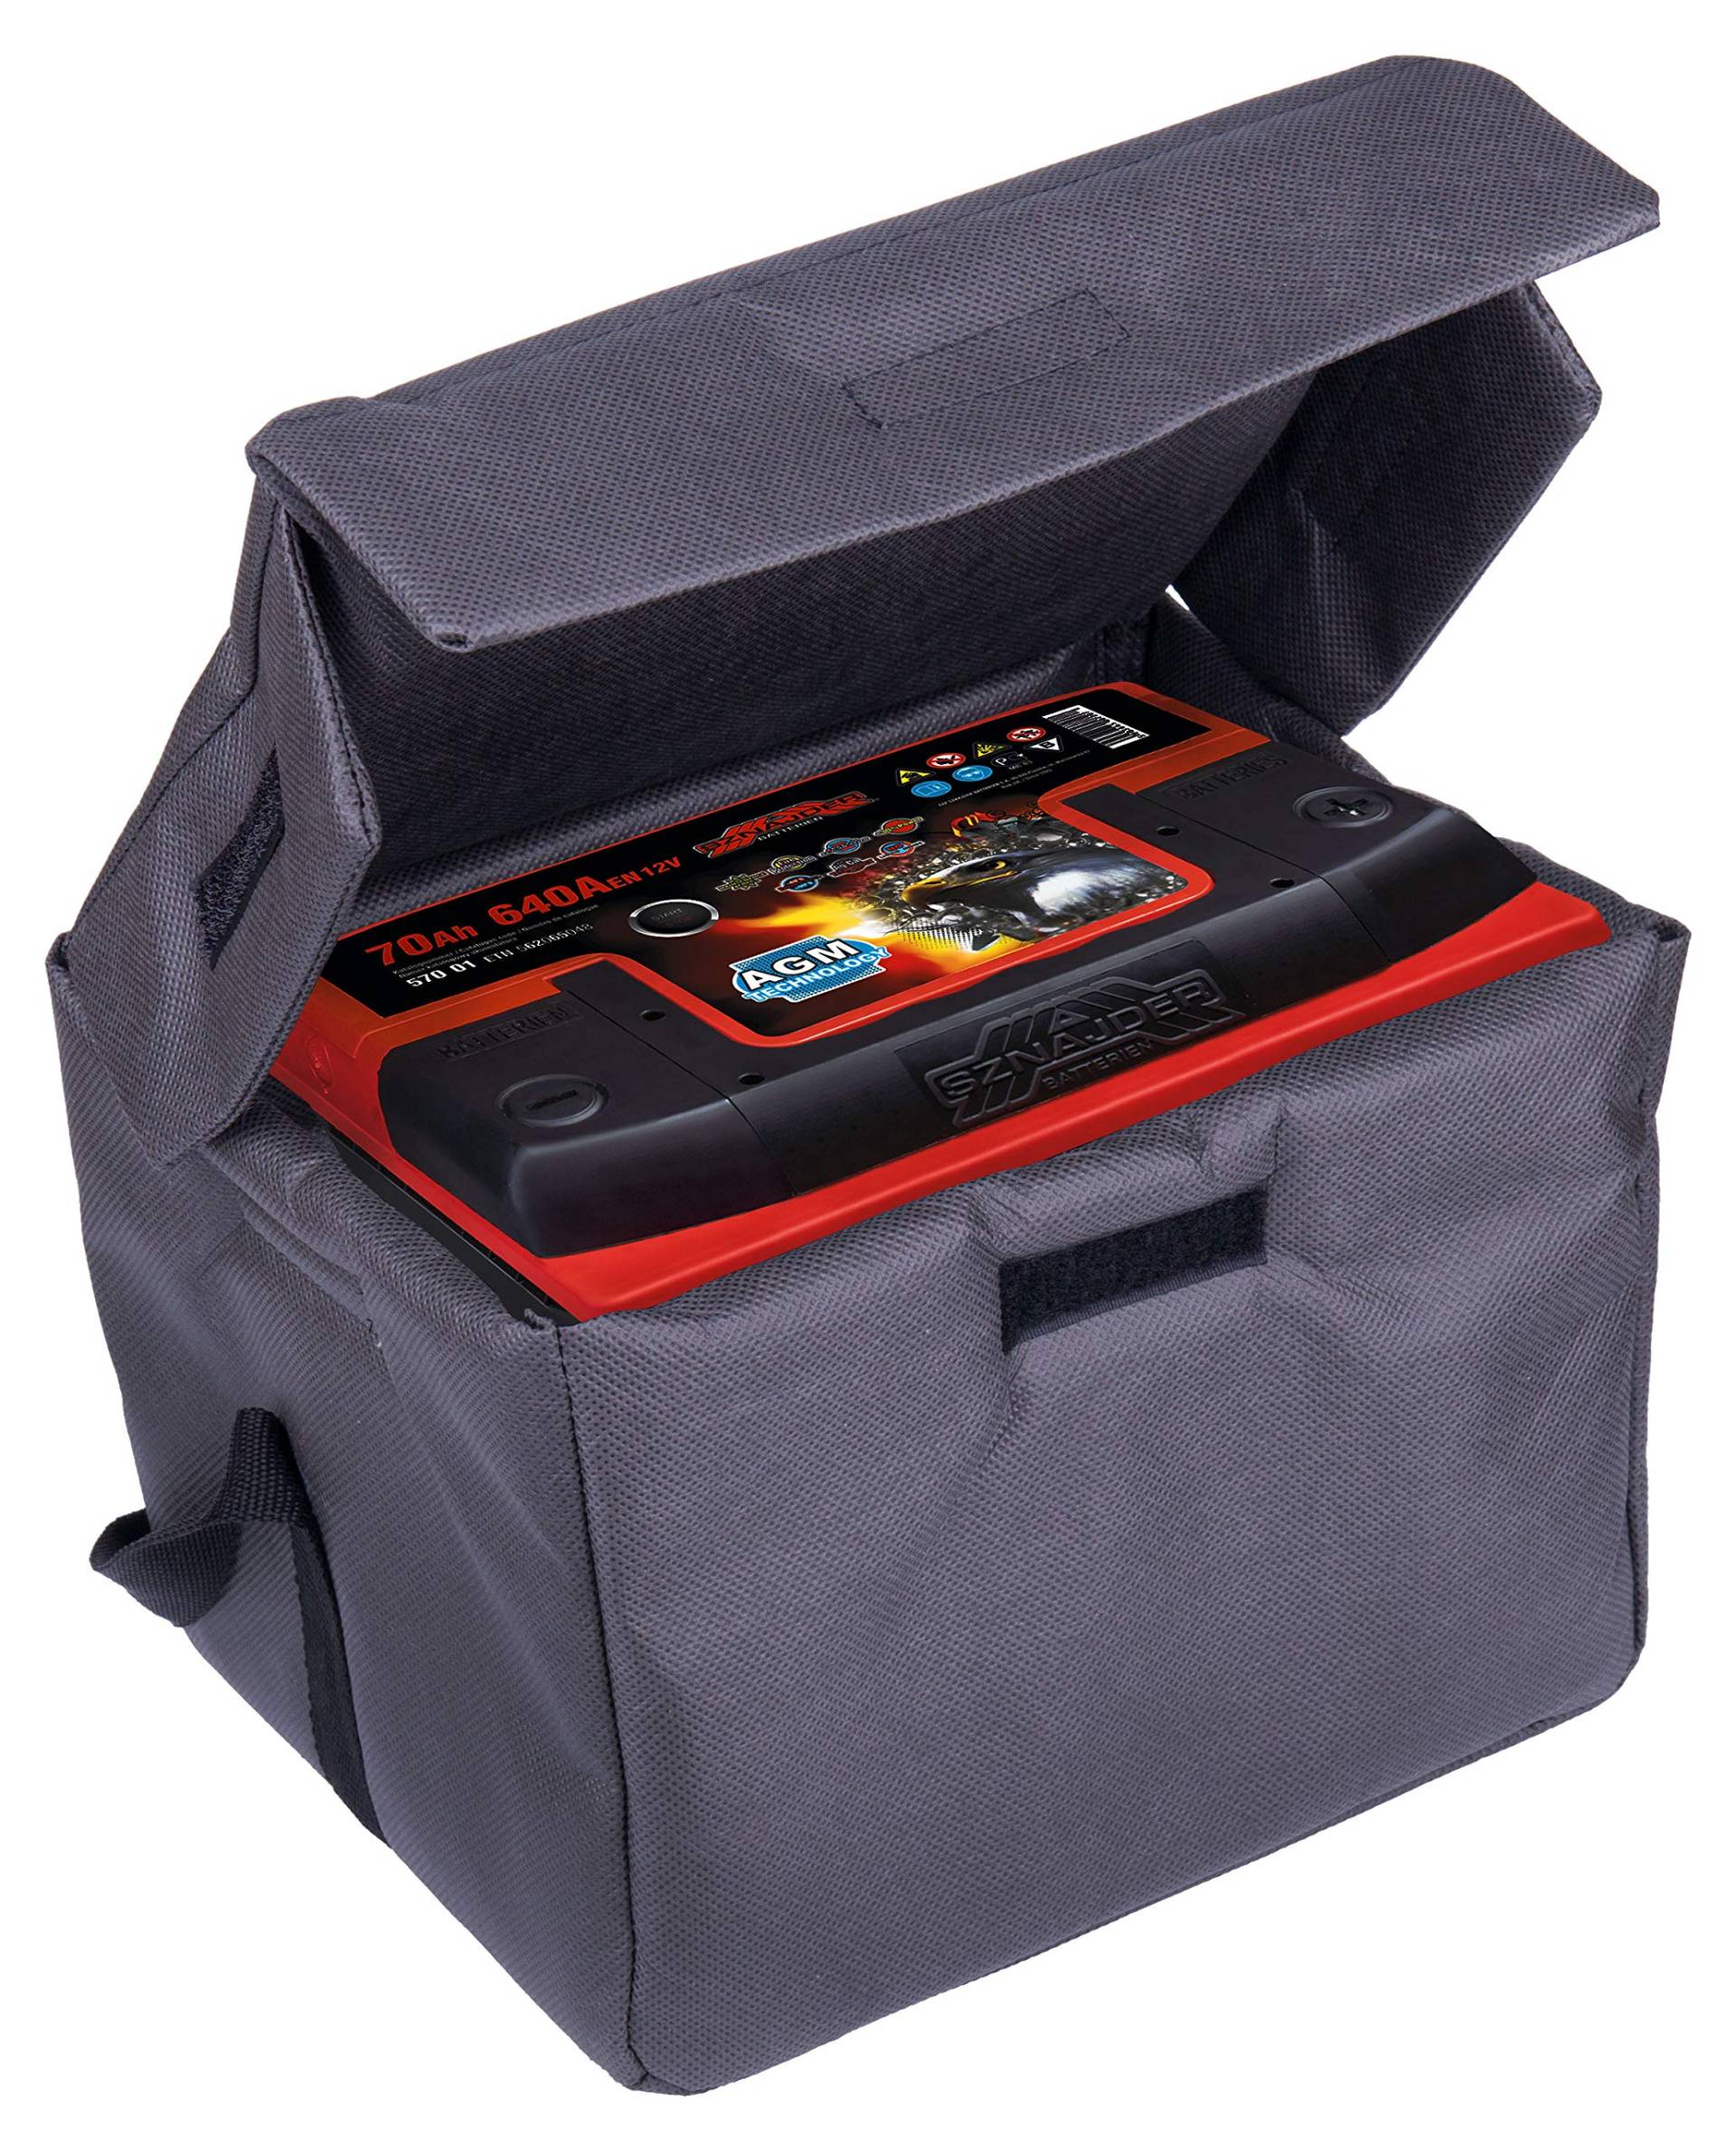 Ferocity Termo-Batterietasche Batterieschutz Frostschutz Batteriehülle Thermotasche für 65-75 Ah geeignet, Größe L von Ferocity